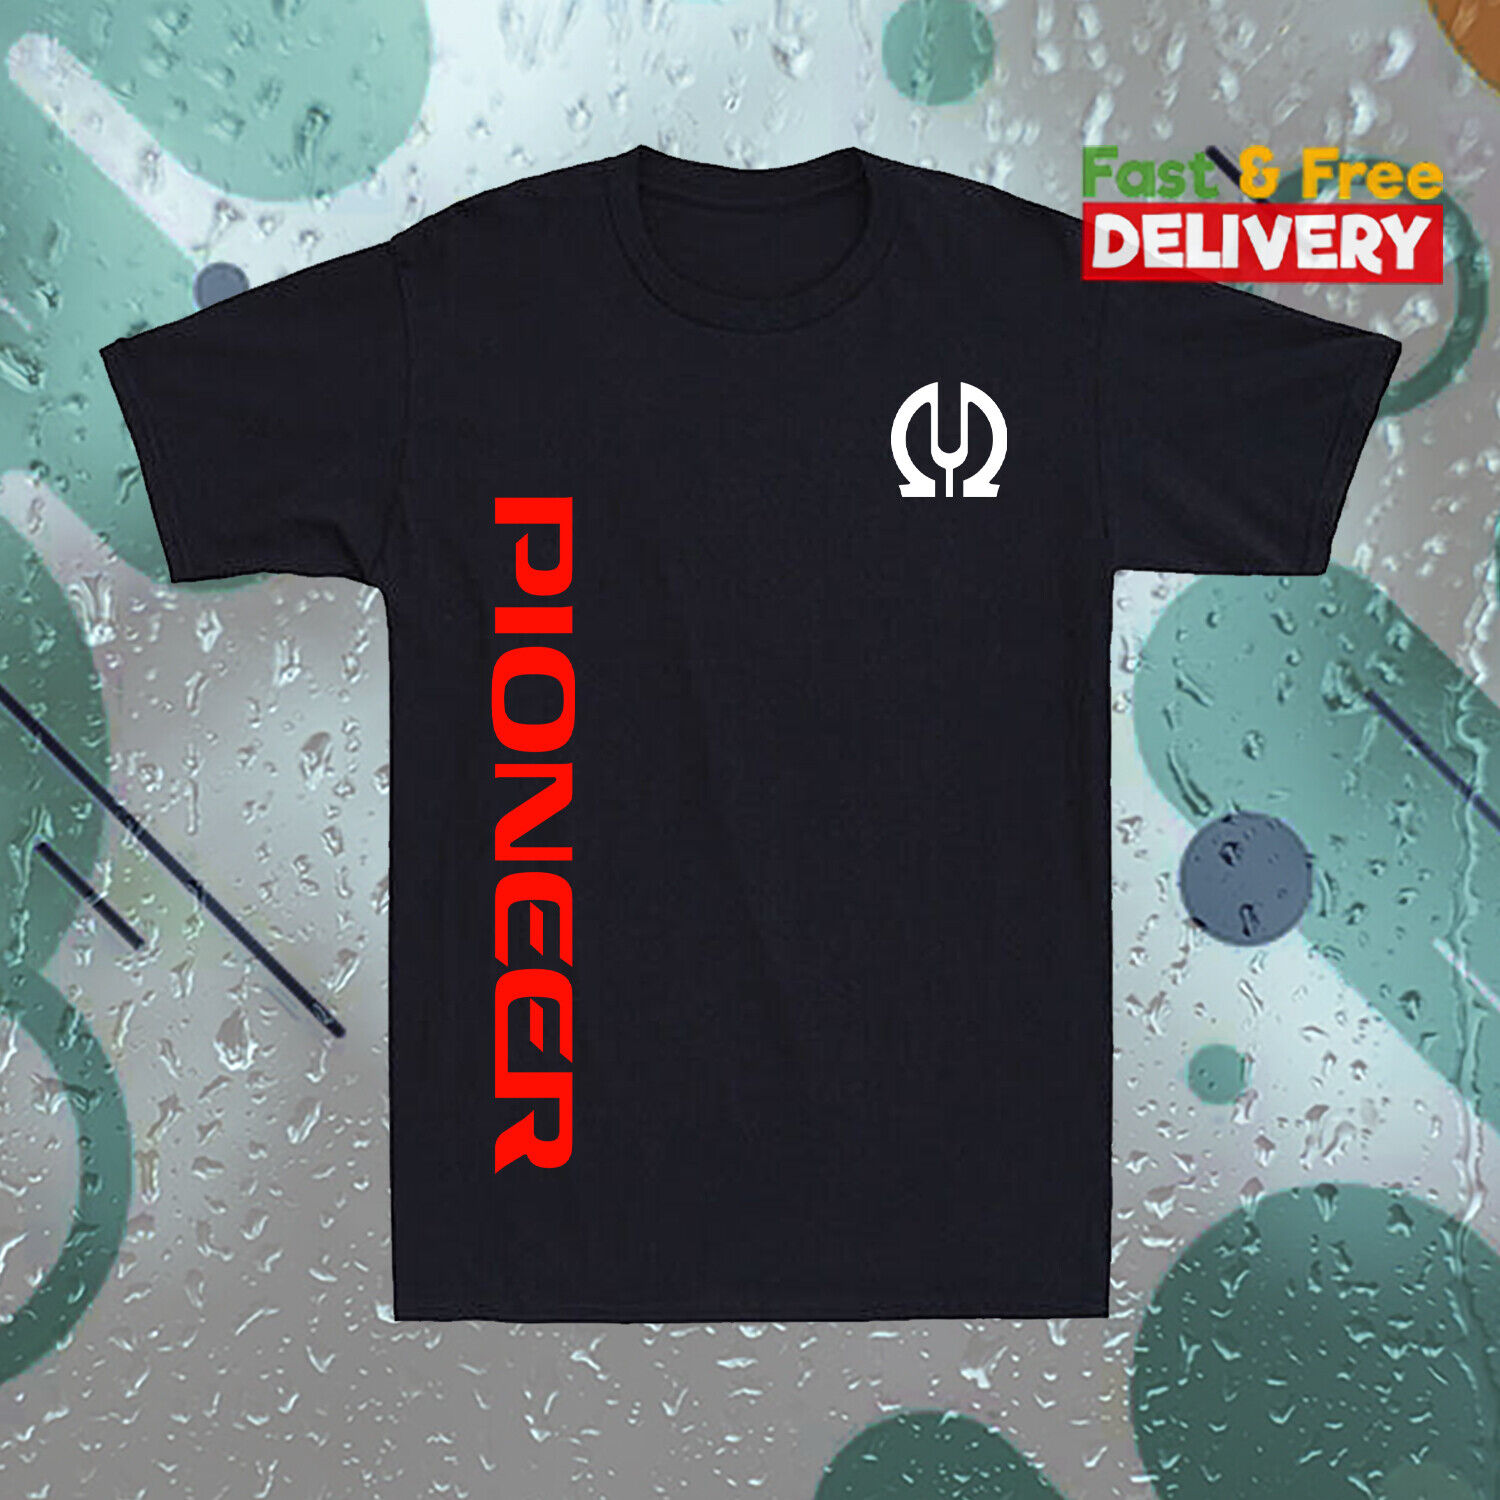 Pioneer Logo T-shirt USA Size S-5XL